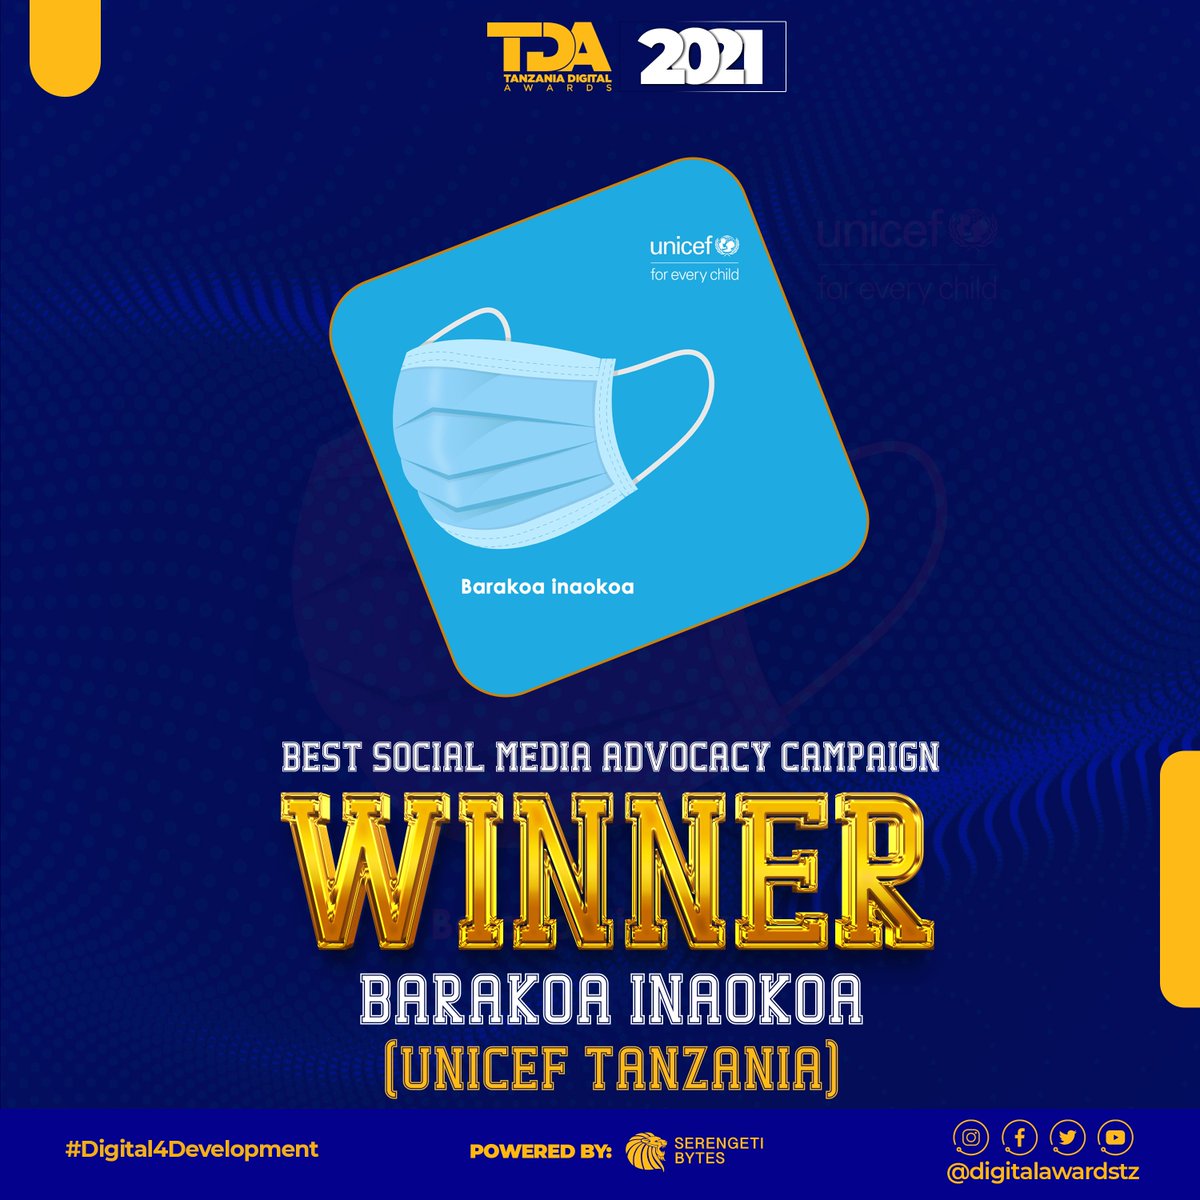 Group B: #DigitalAdvocacy
Social Media Advocacy Campaign Sub-category;
- #BarakoaInaokoa-UNICEF
- #NiZamuyaWabunge-Msichana Initiative
- #GirlsTakeOver-Plan Tanzania
- #UstawiSalamaMtandaoni-Women At Web TZ
- #AminiaUsawa-LHRC

The winner is #BarakoaInaokoa - @UNICEFTanzania.